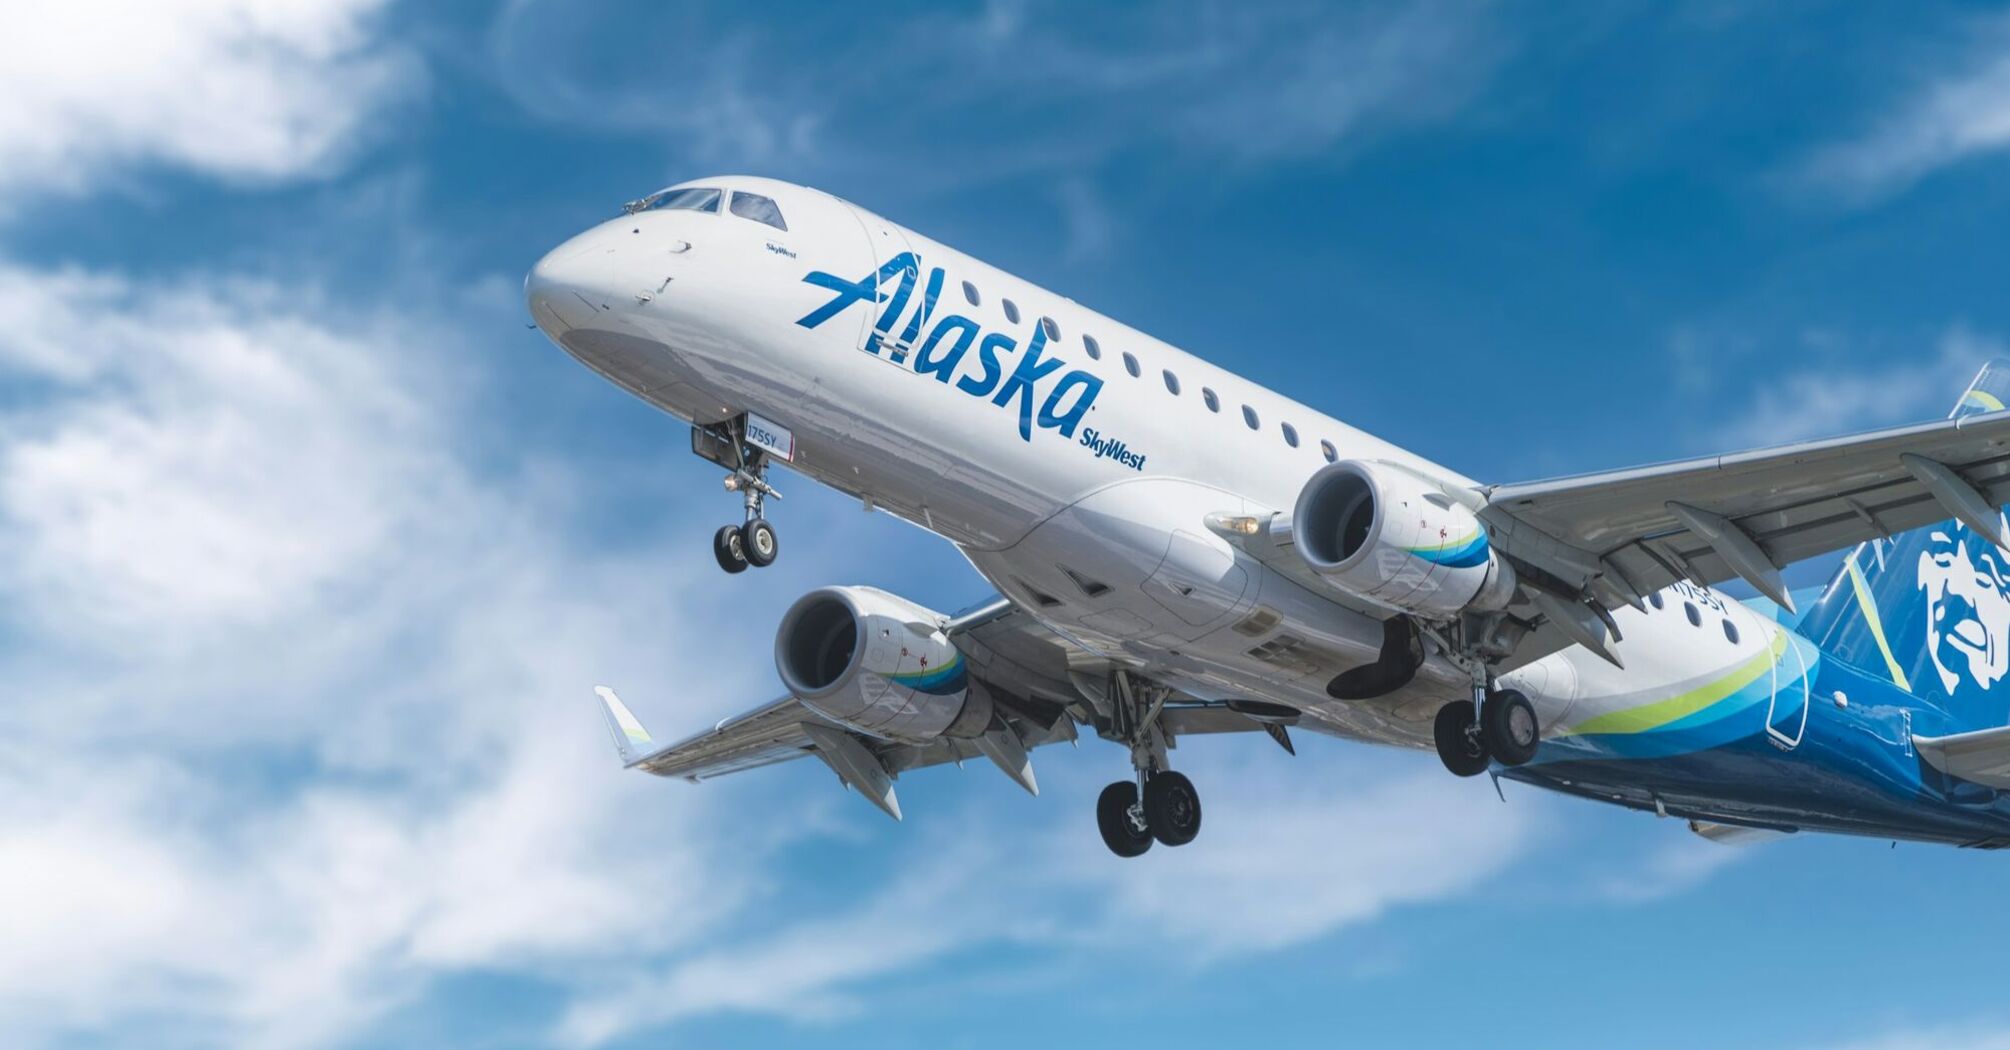 Alaska Airlines plane taking off against a blue sky